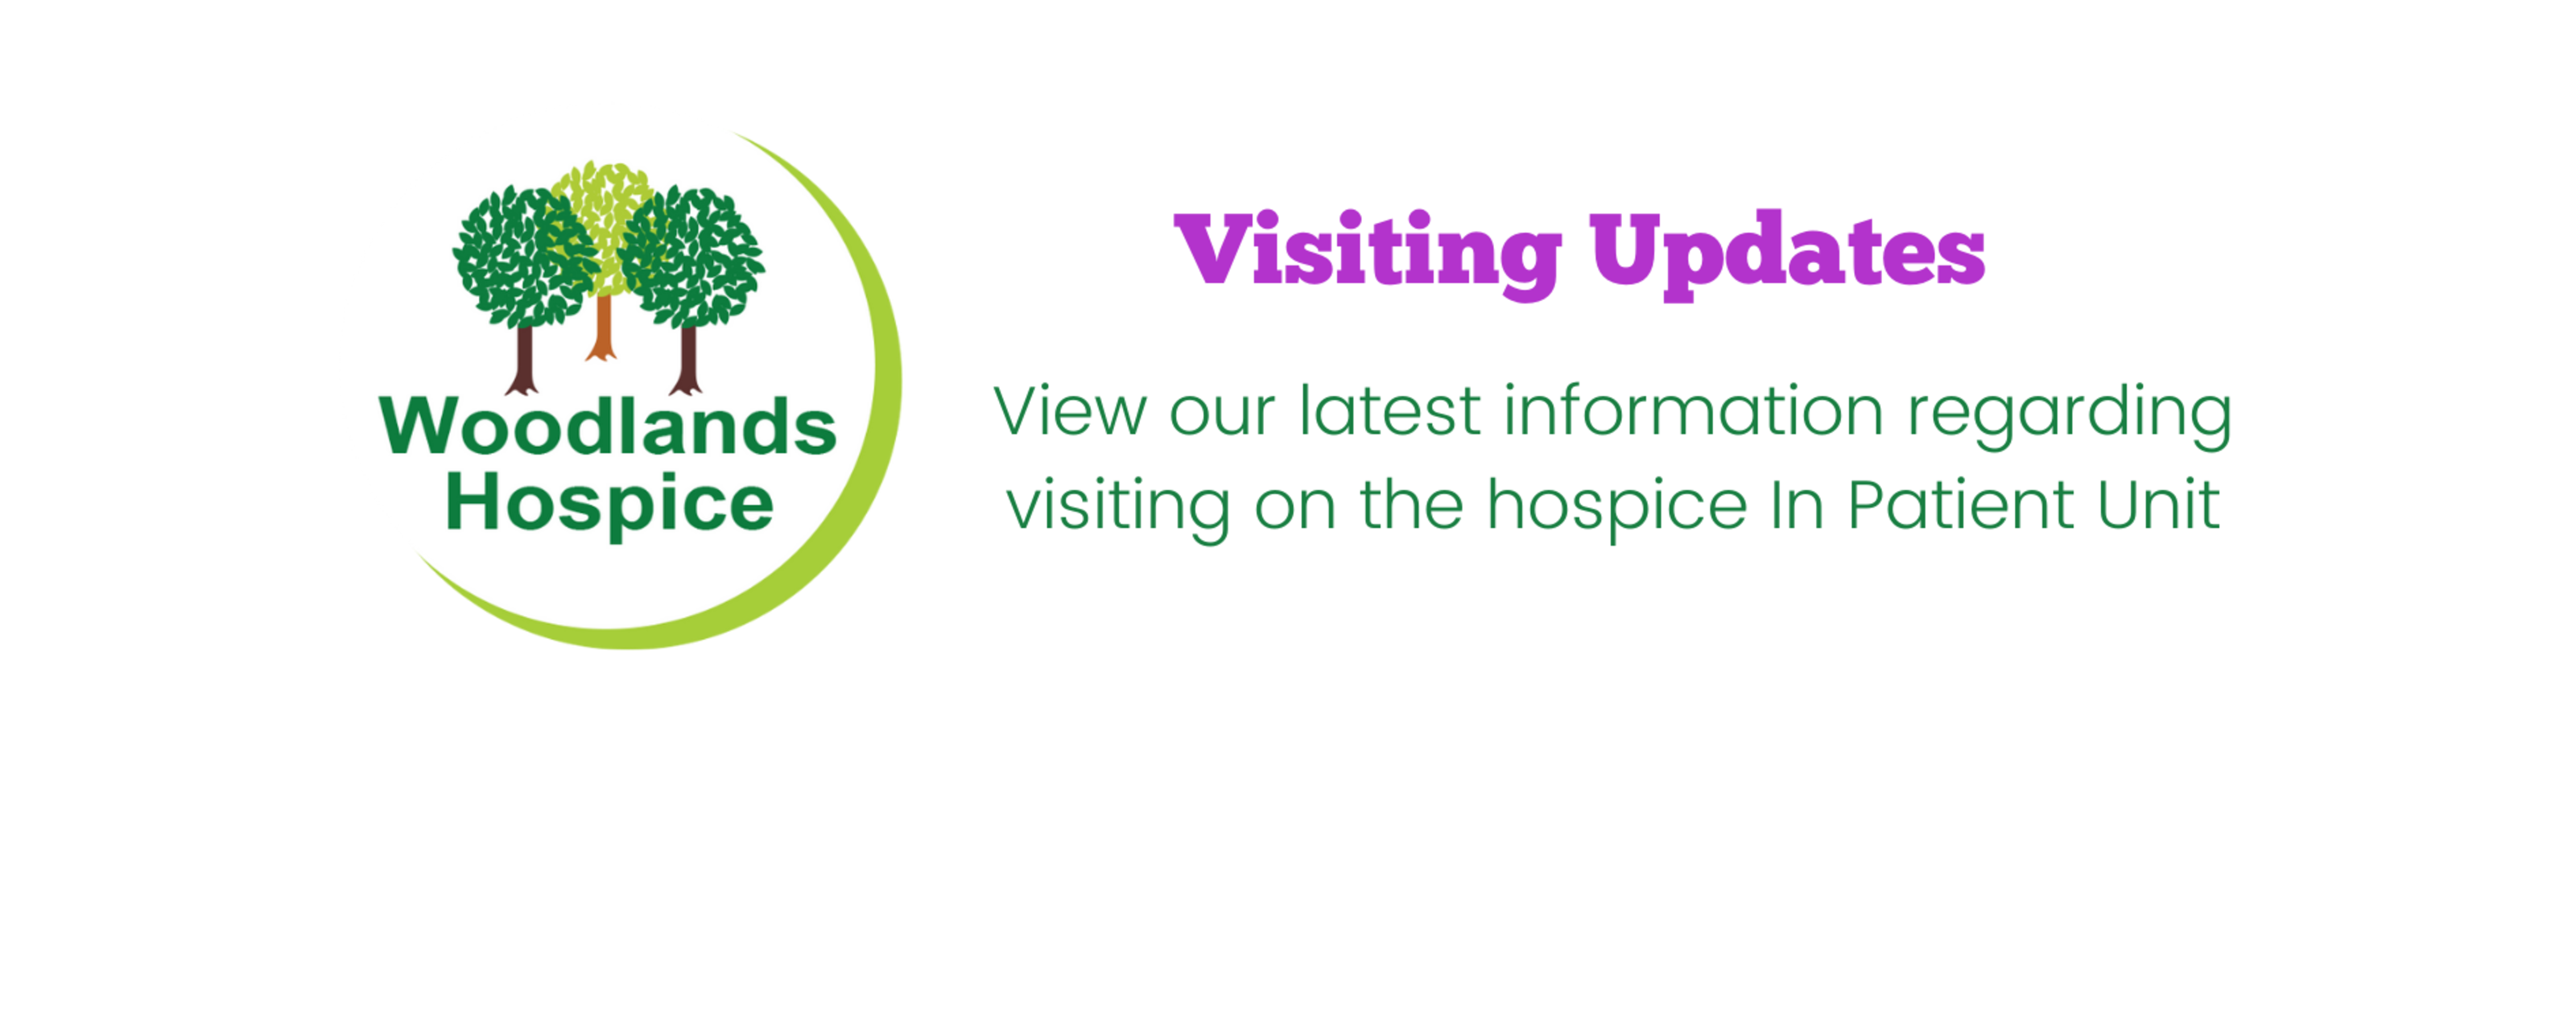 Woodlands Hospice - Visiting Updates